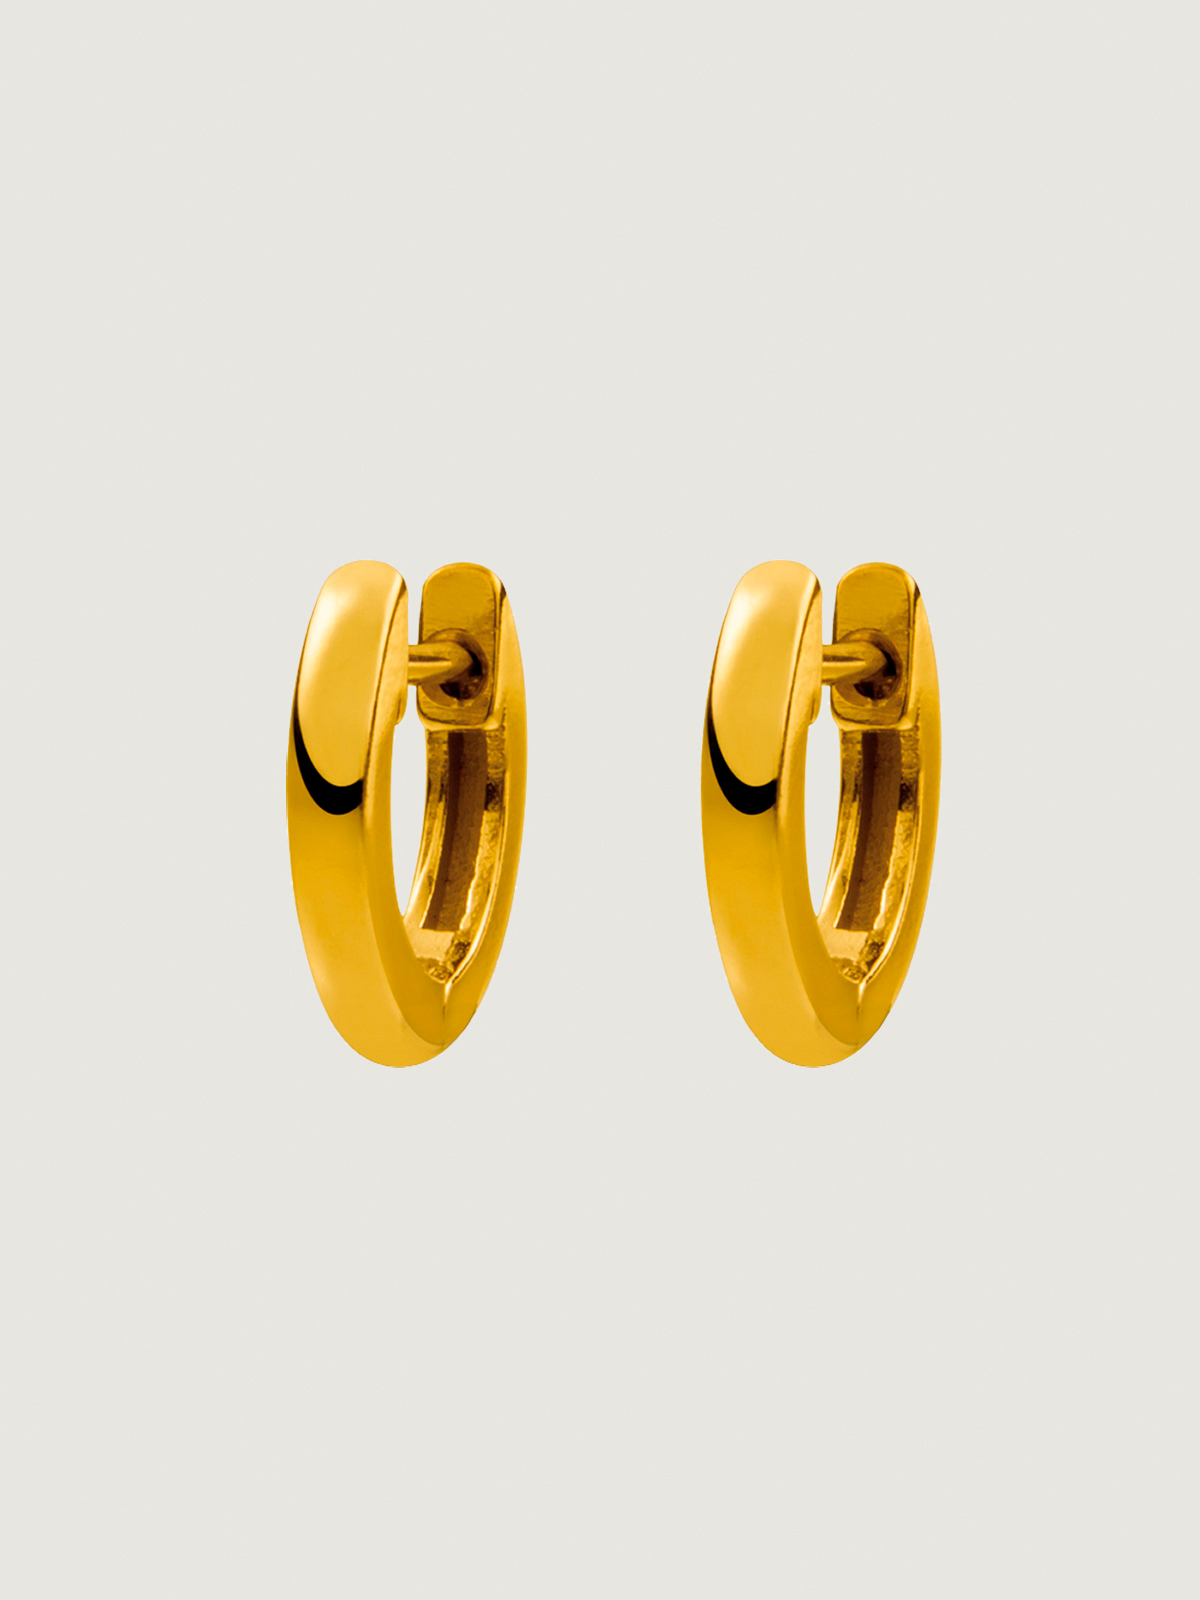 Small 925 silver hoop earrings coated in 18K yellow gold.